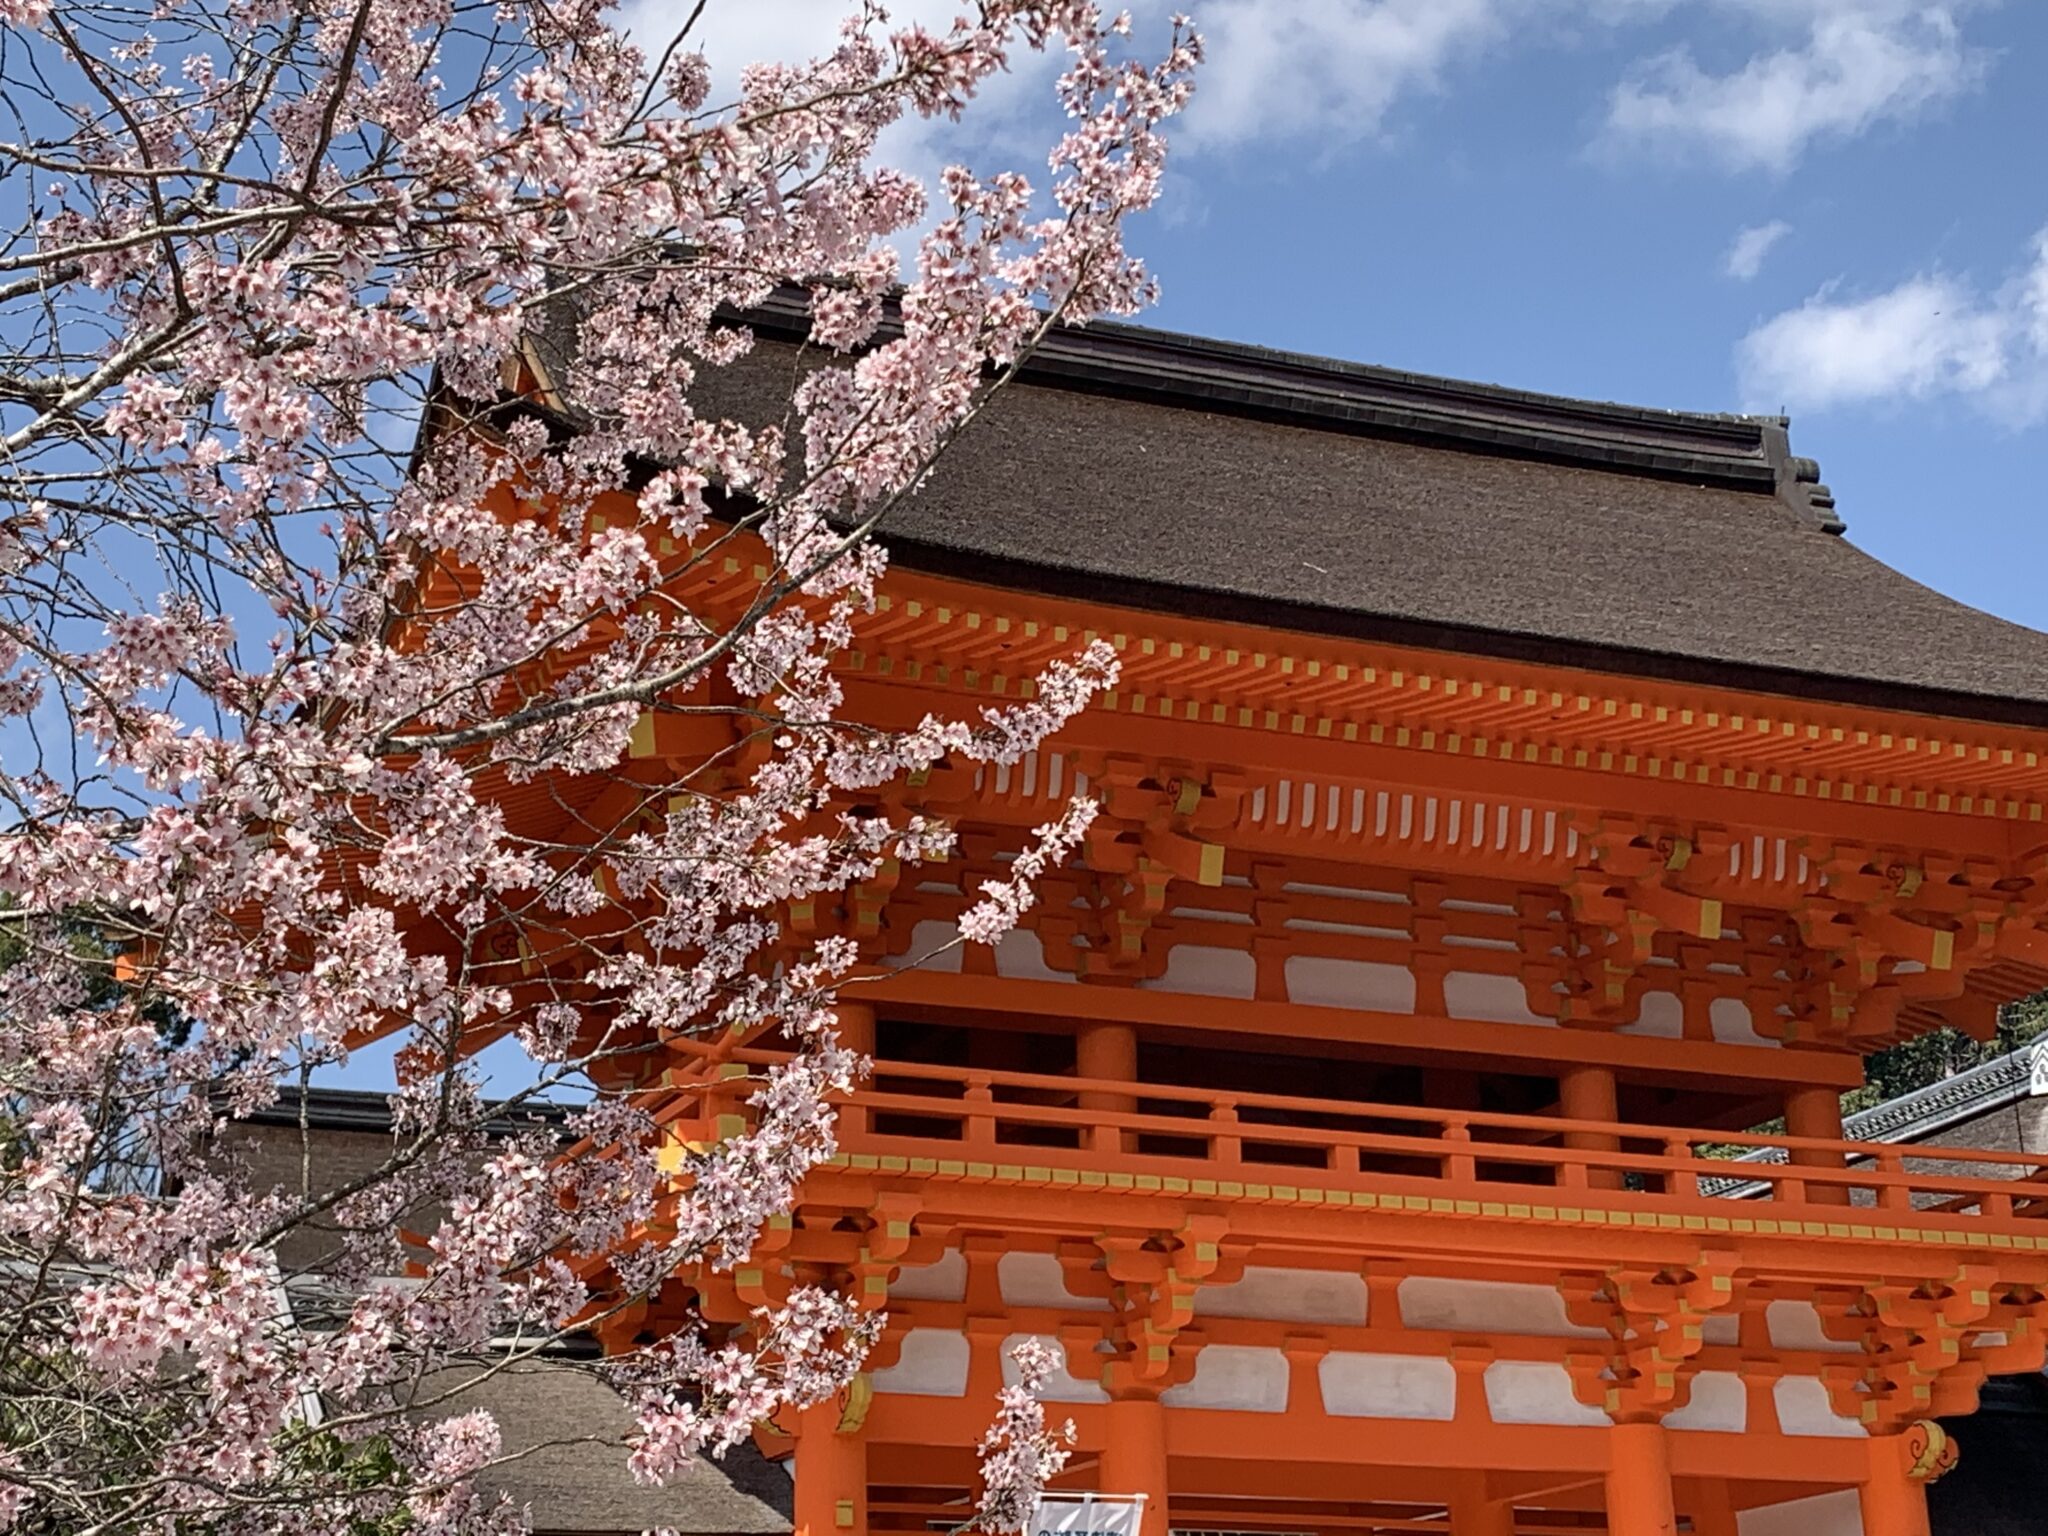 Main shrine and cherry blossoms